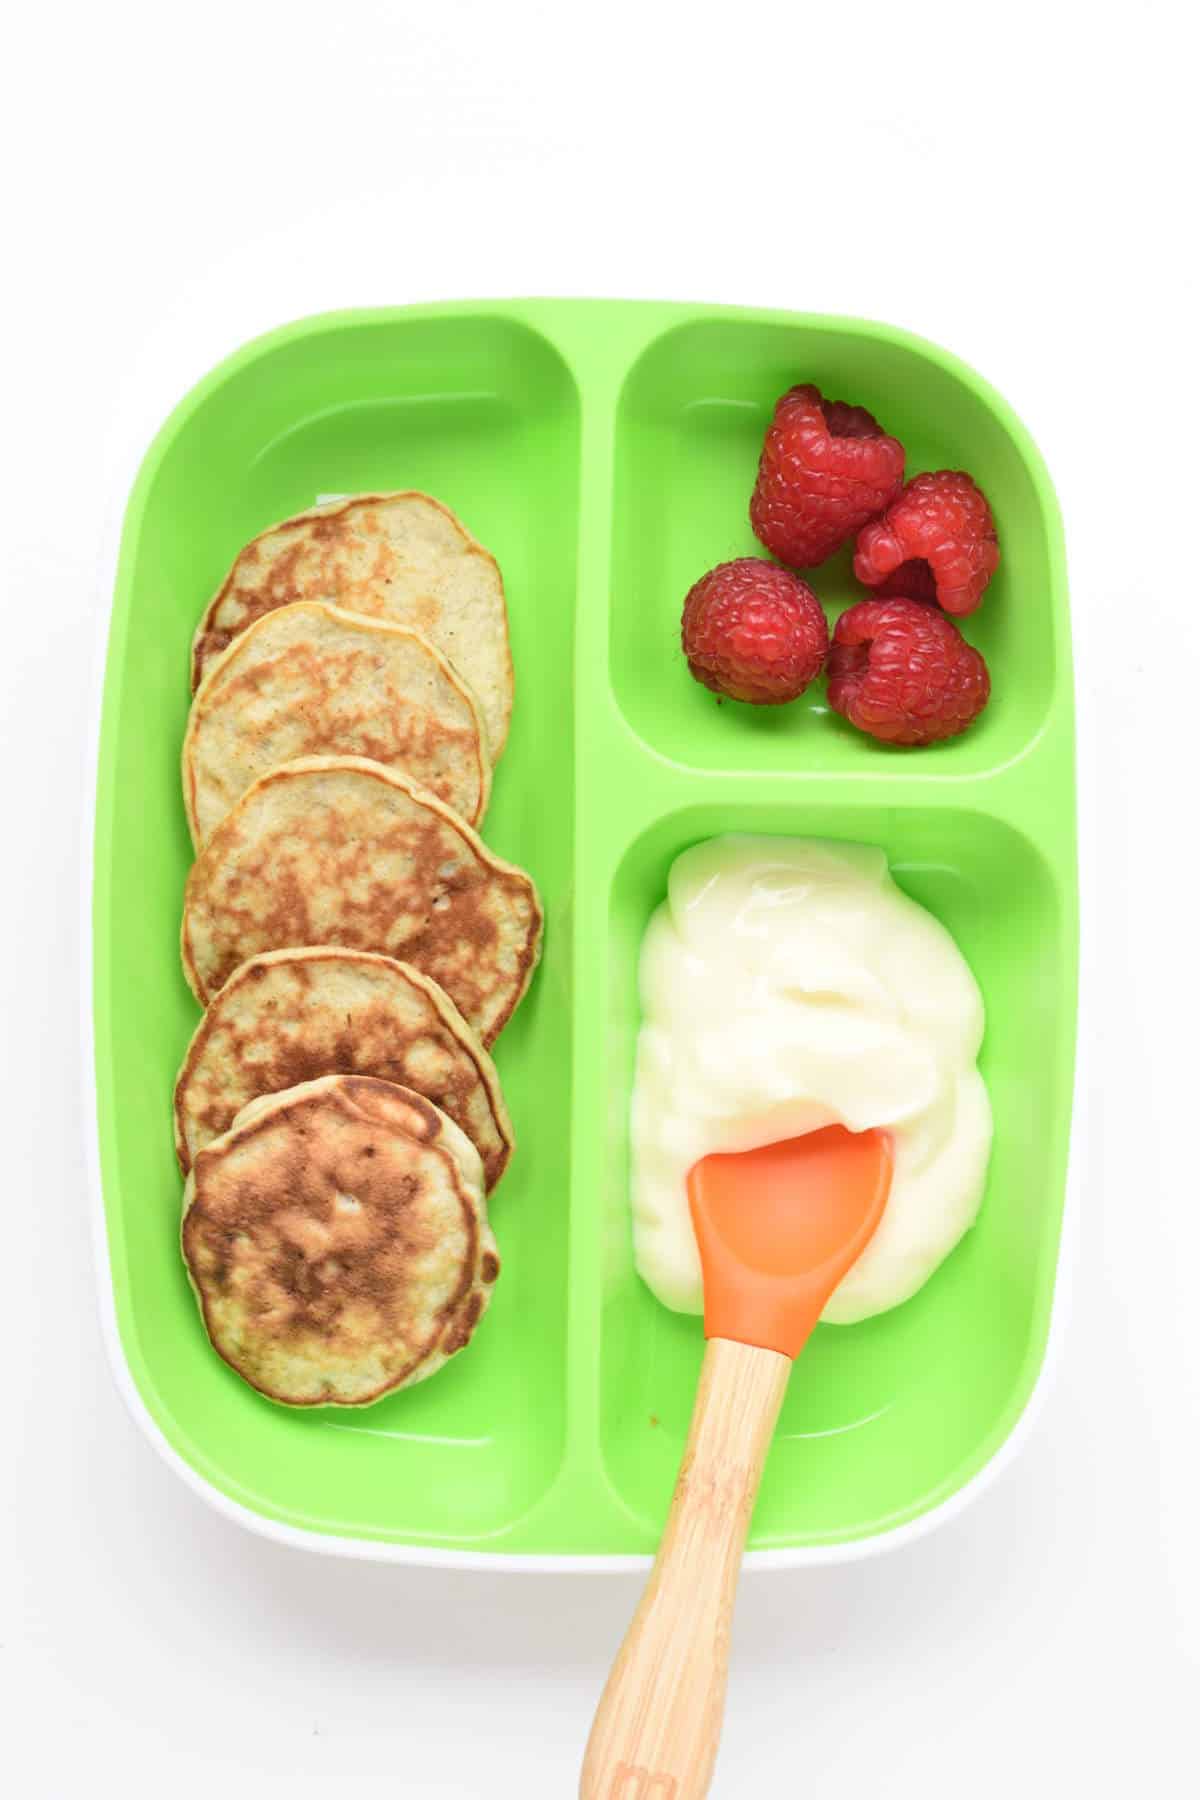 Baby Banana Pancakes On a Kid Serving Tray with vegan yogurts and raspberries